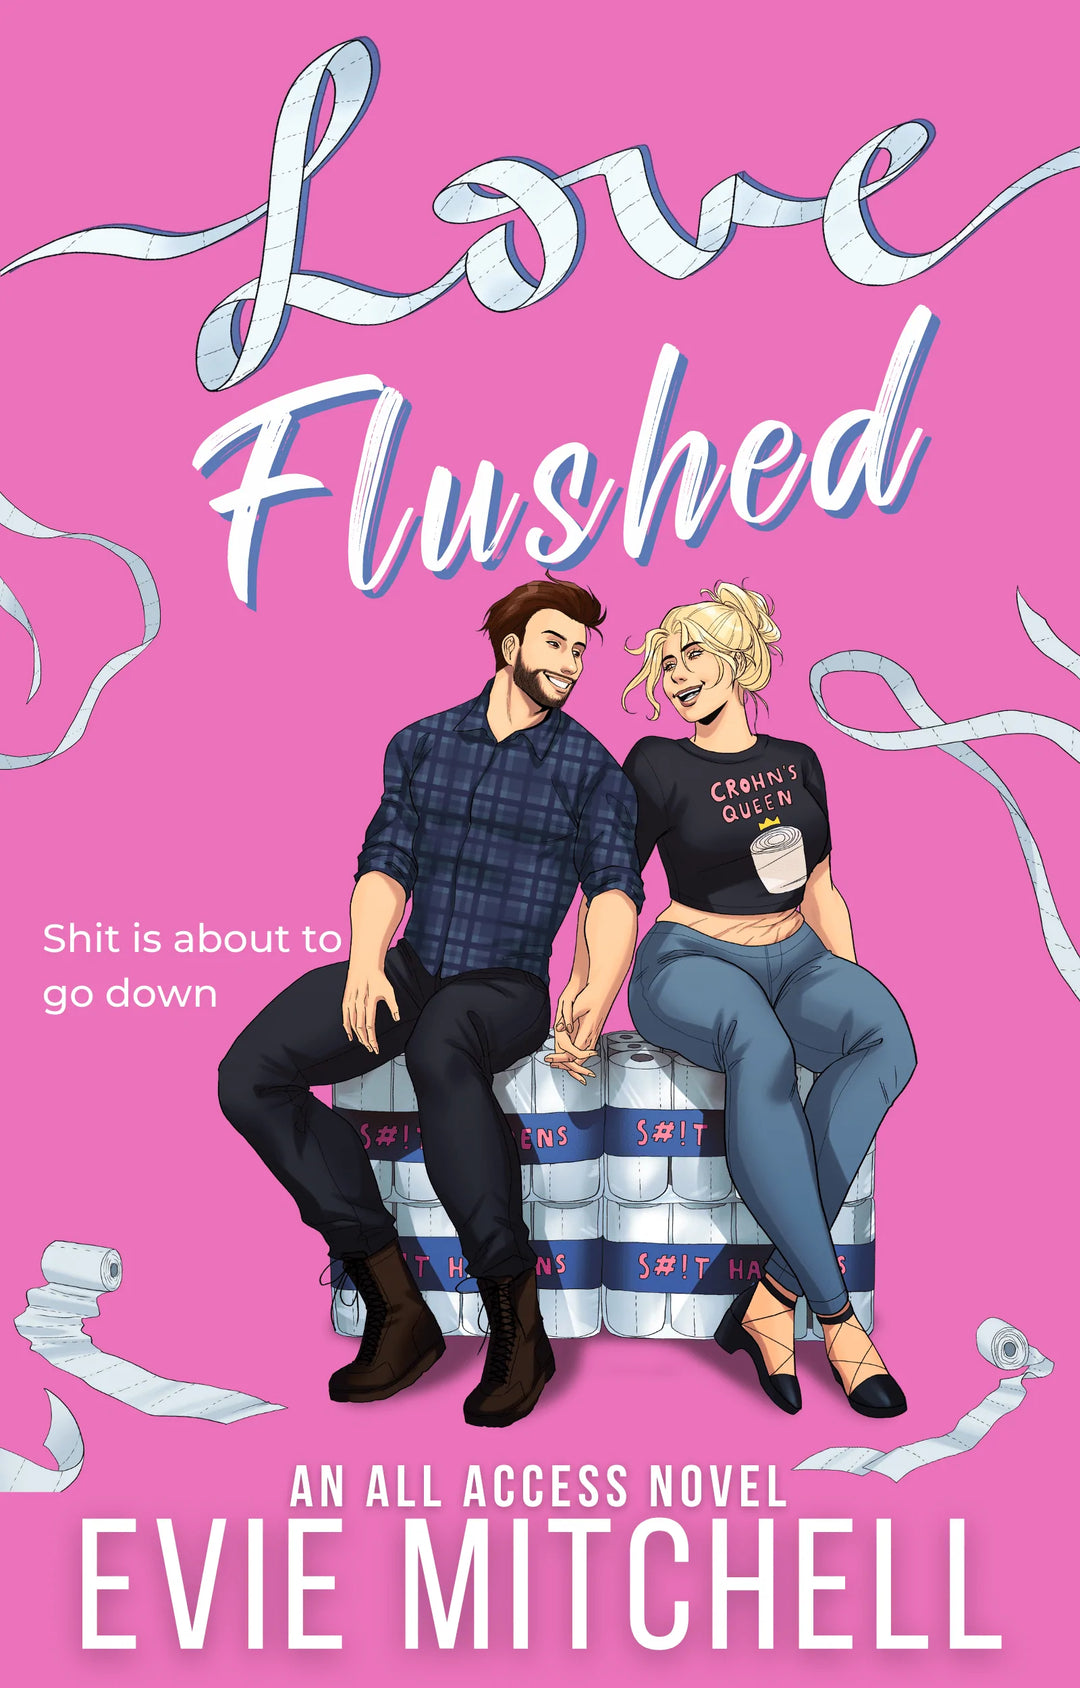 Evie Mitchell eBook Love Flushed (EBOOK)